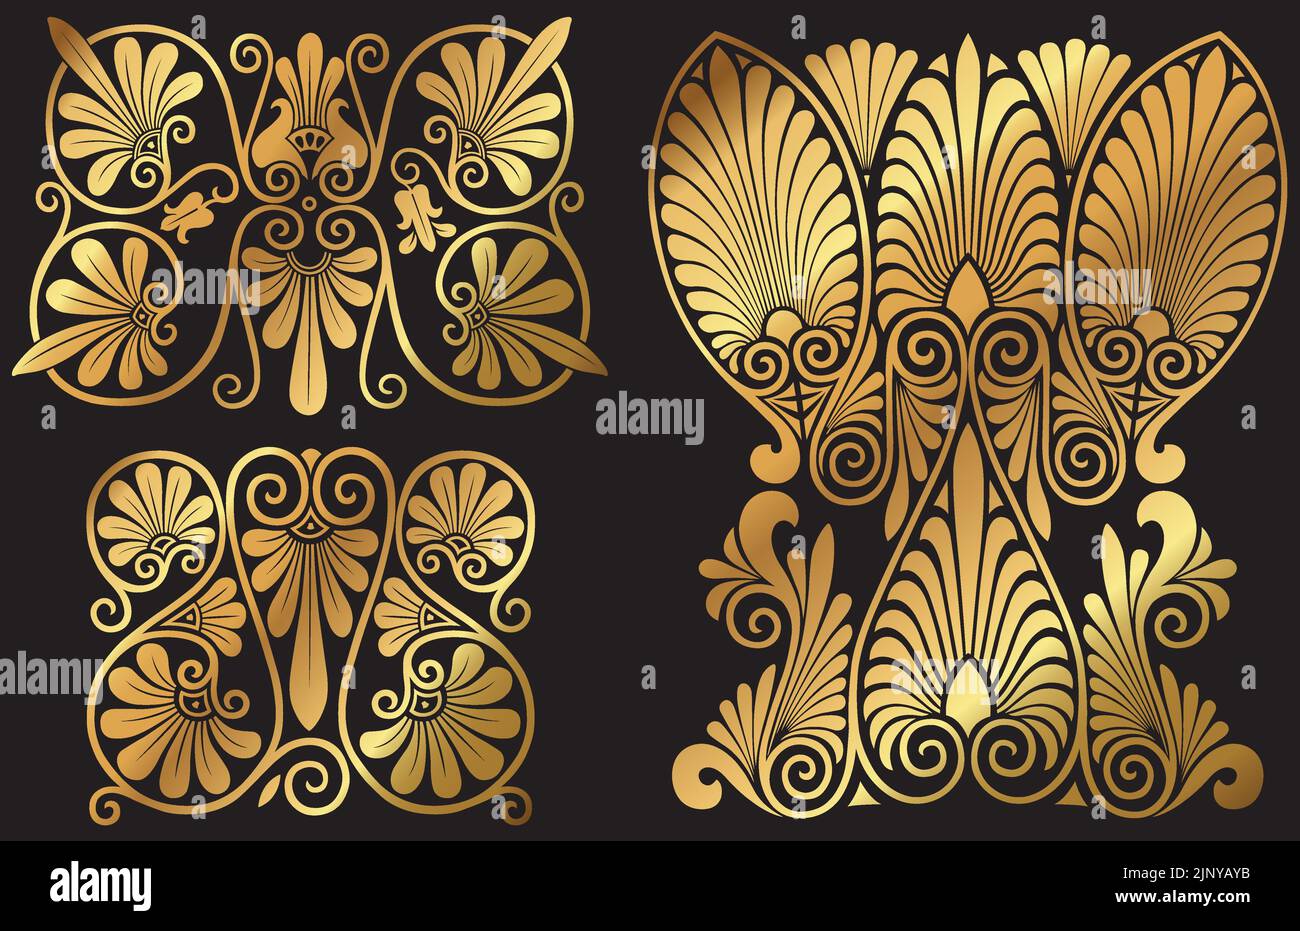 A vintage vector gold decorative Greek style decorative pattern. Stock Vector